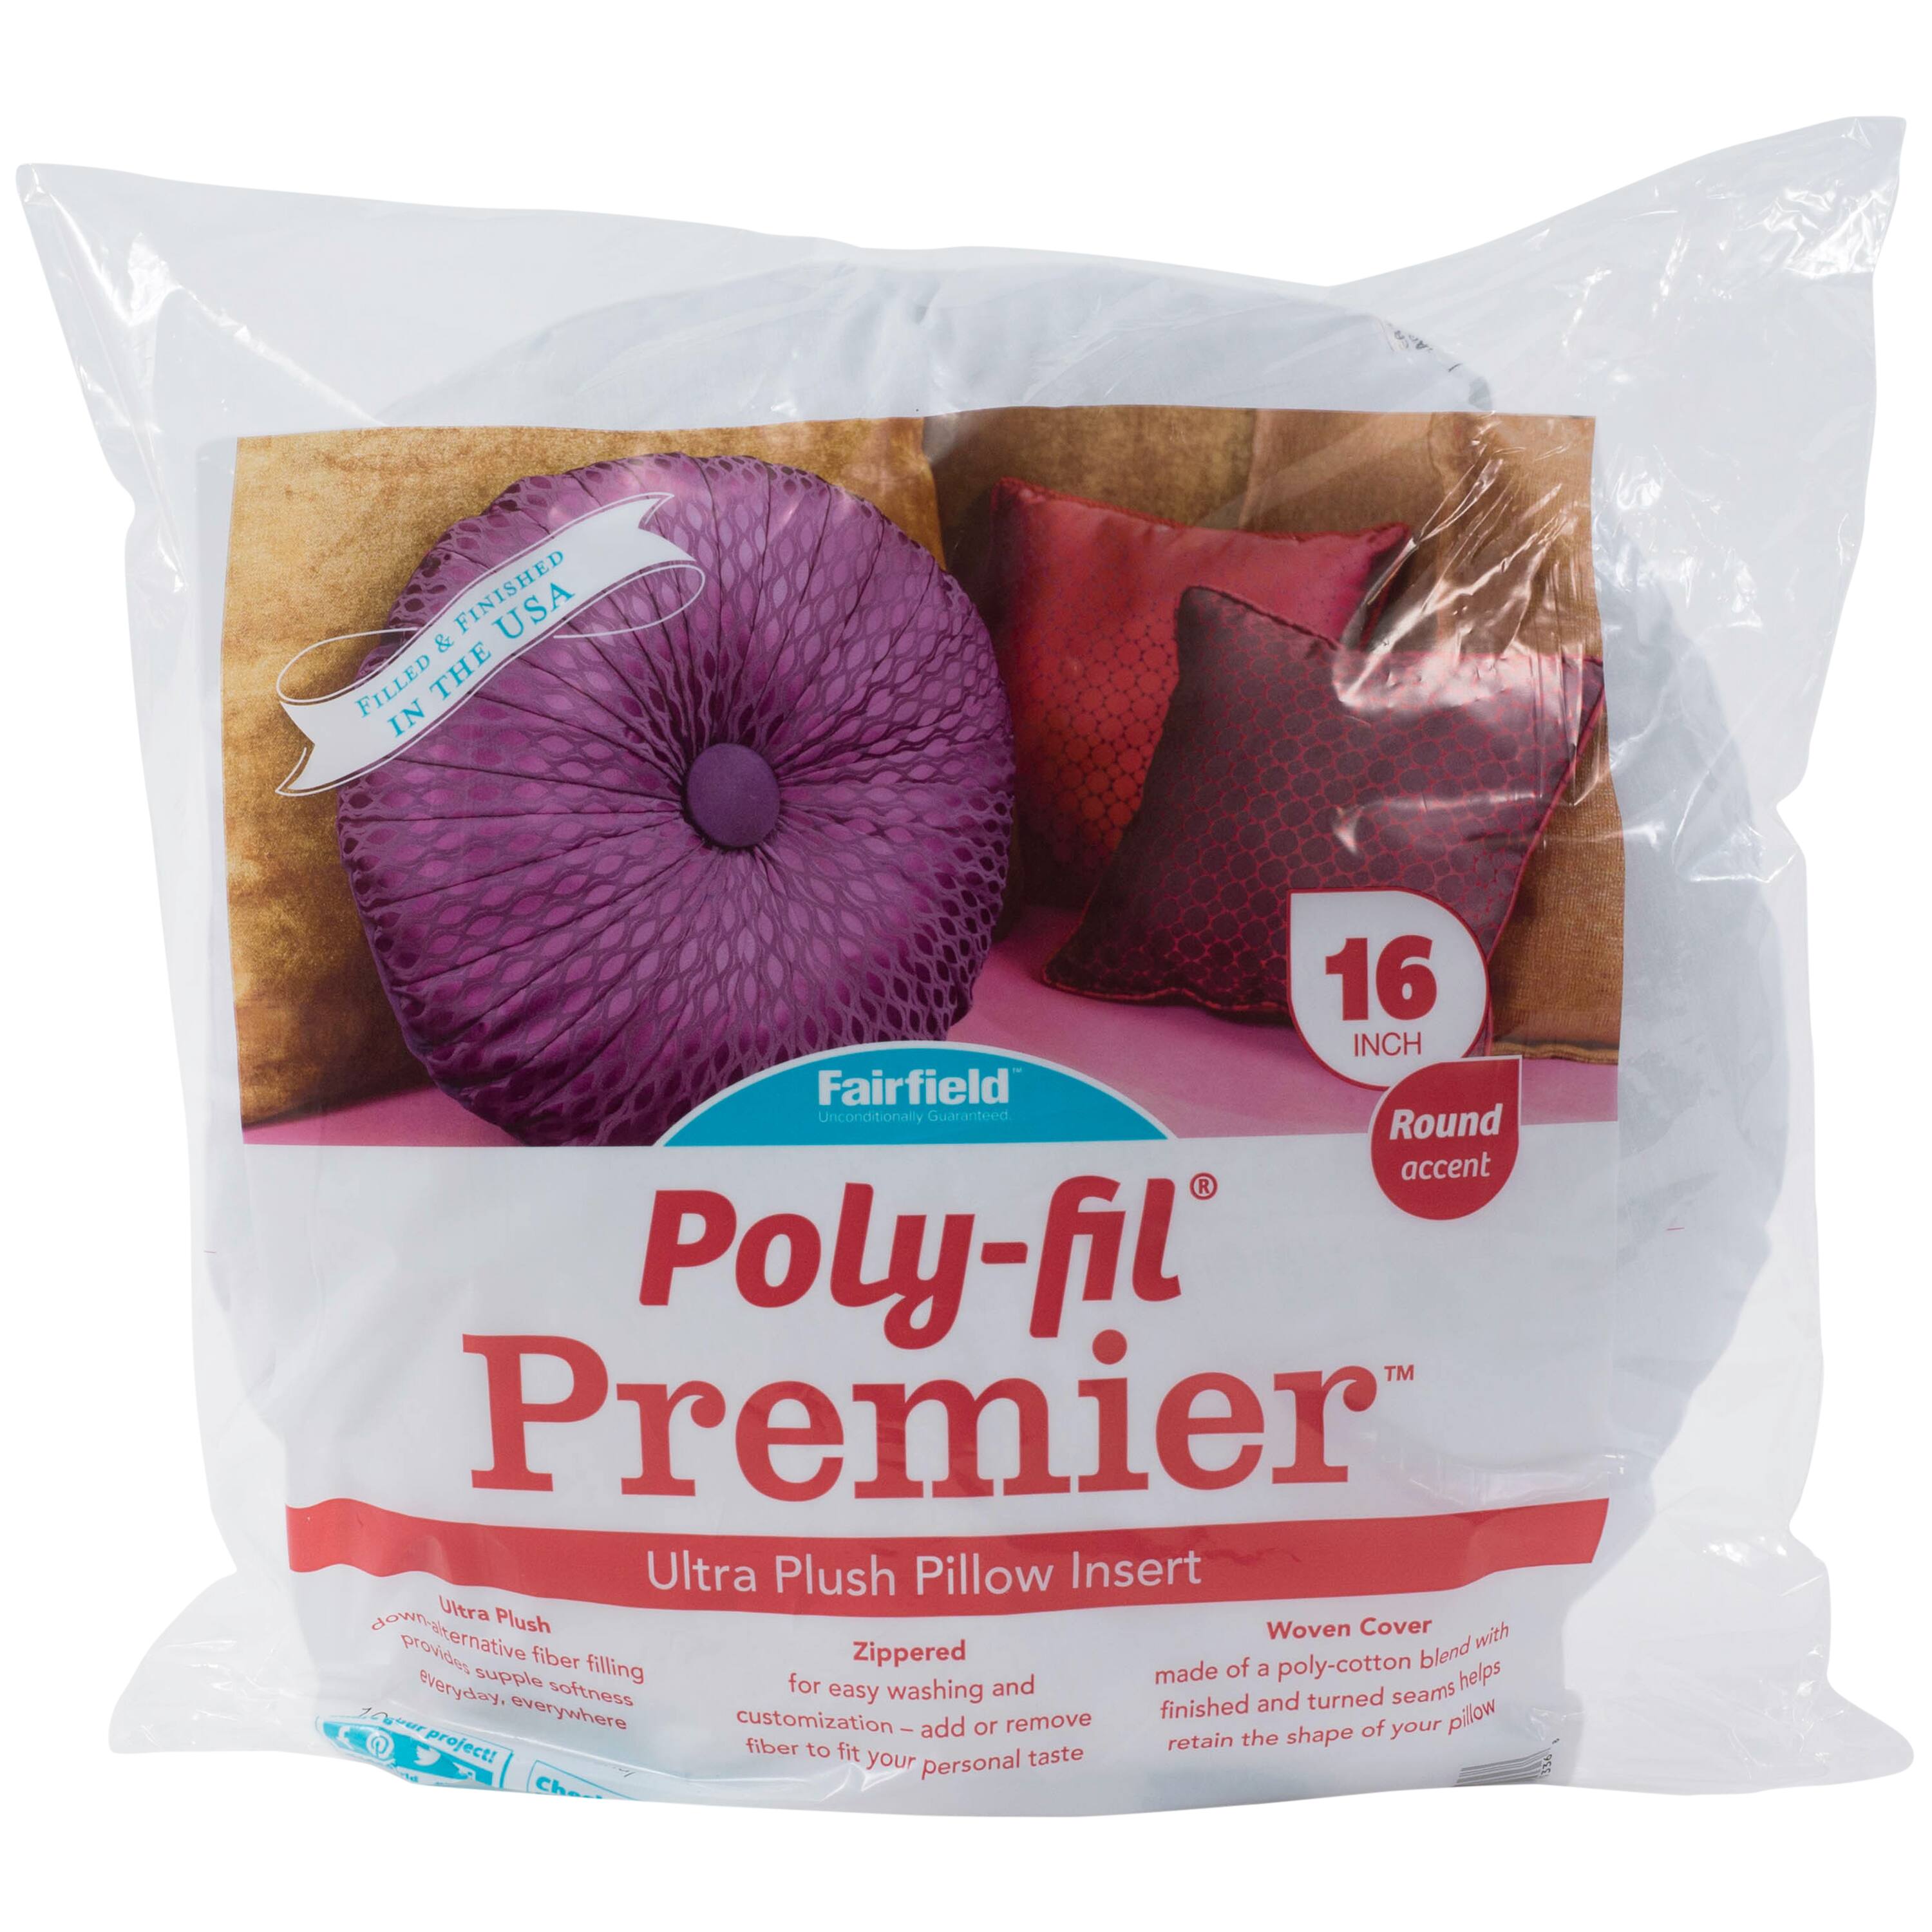 16 Round FOB: Mi Poly-Fil Premier Accent Pillow Insert - Fairfield